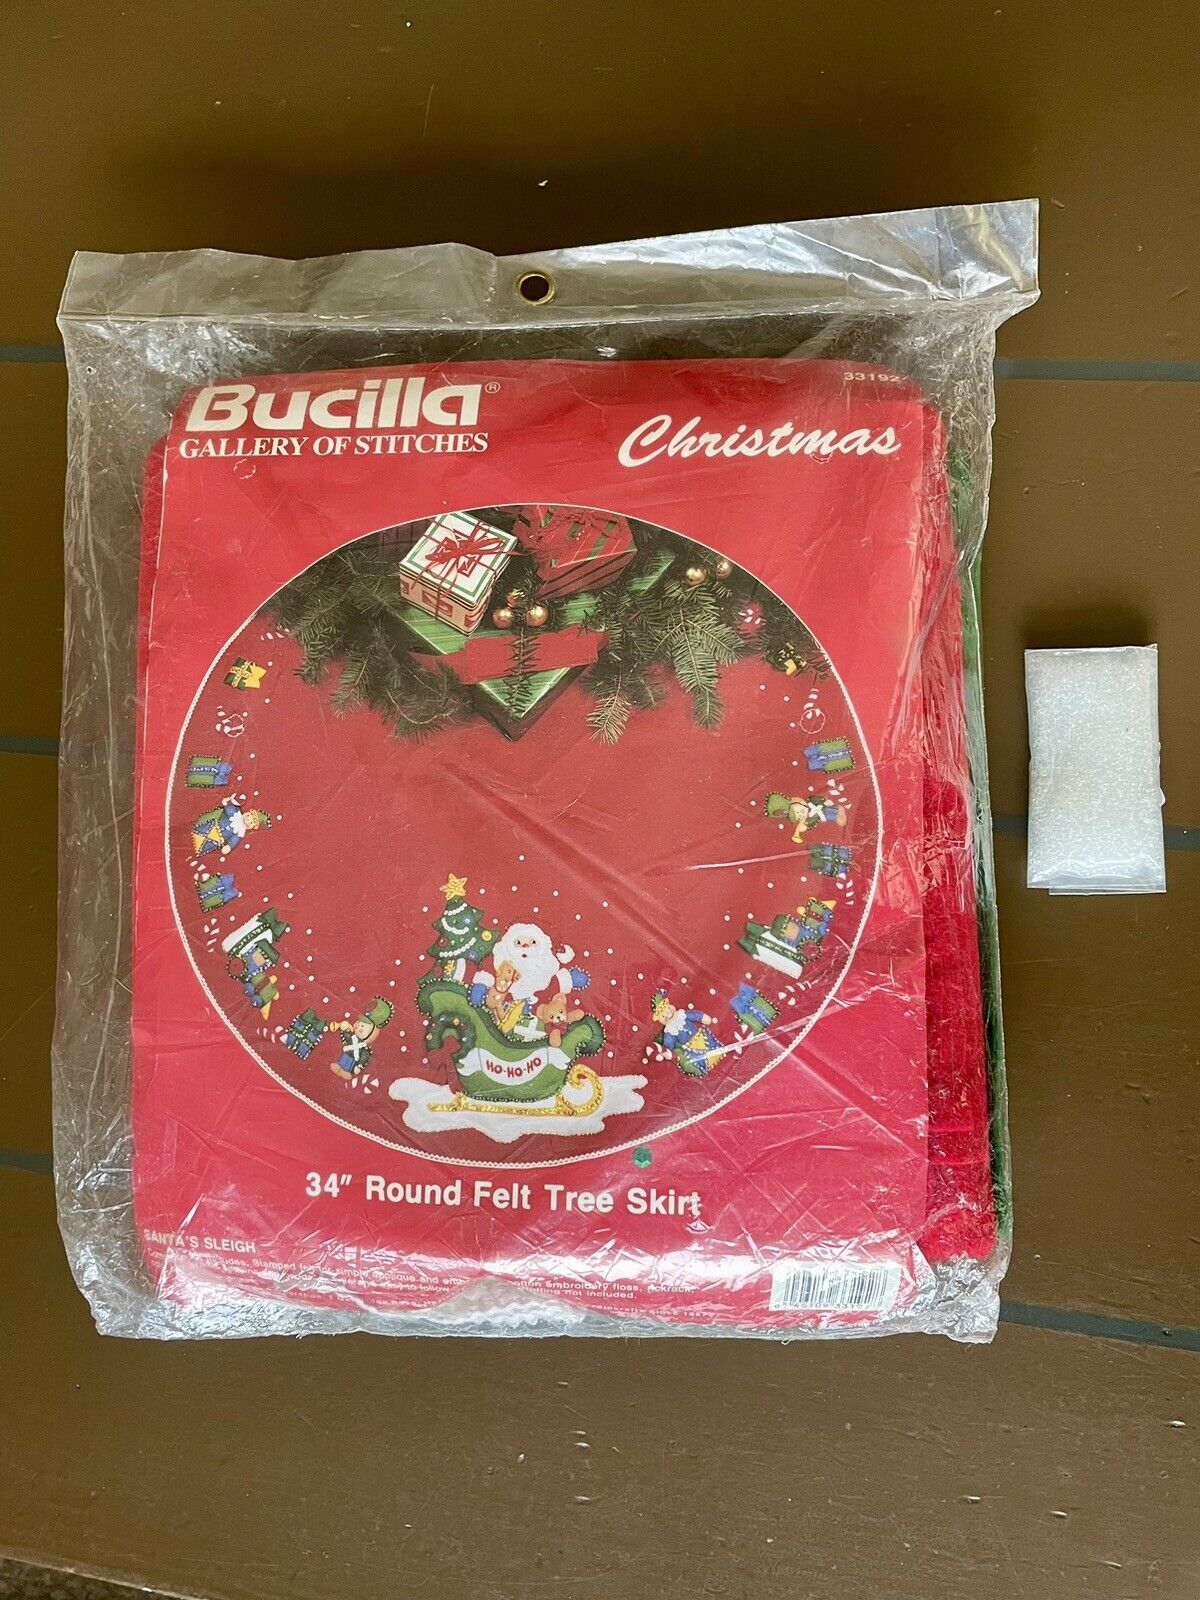 Unopened Bucilla 34” Tree Skirt #33142 Santa’s Sleigh With Extra Crystal Beads